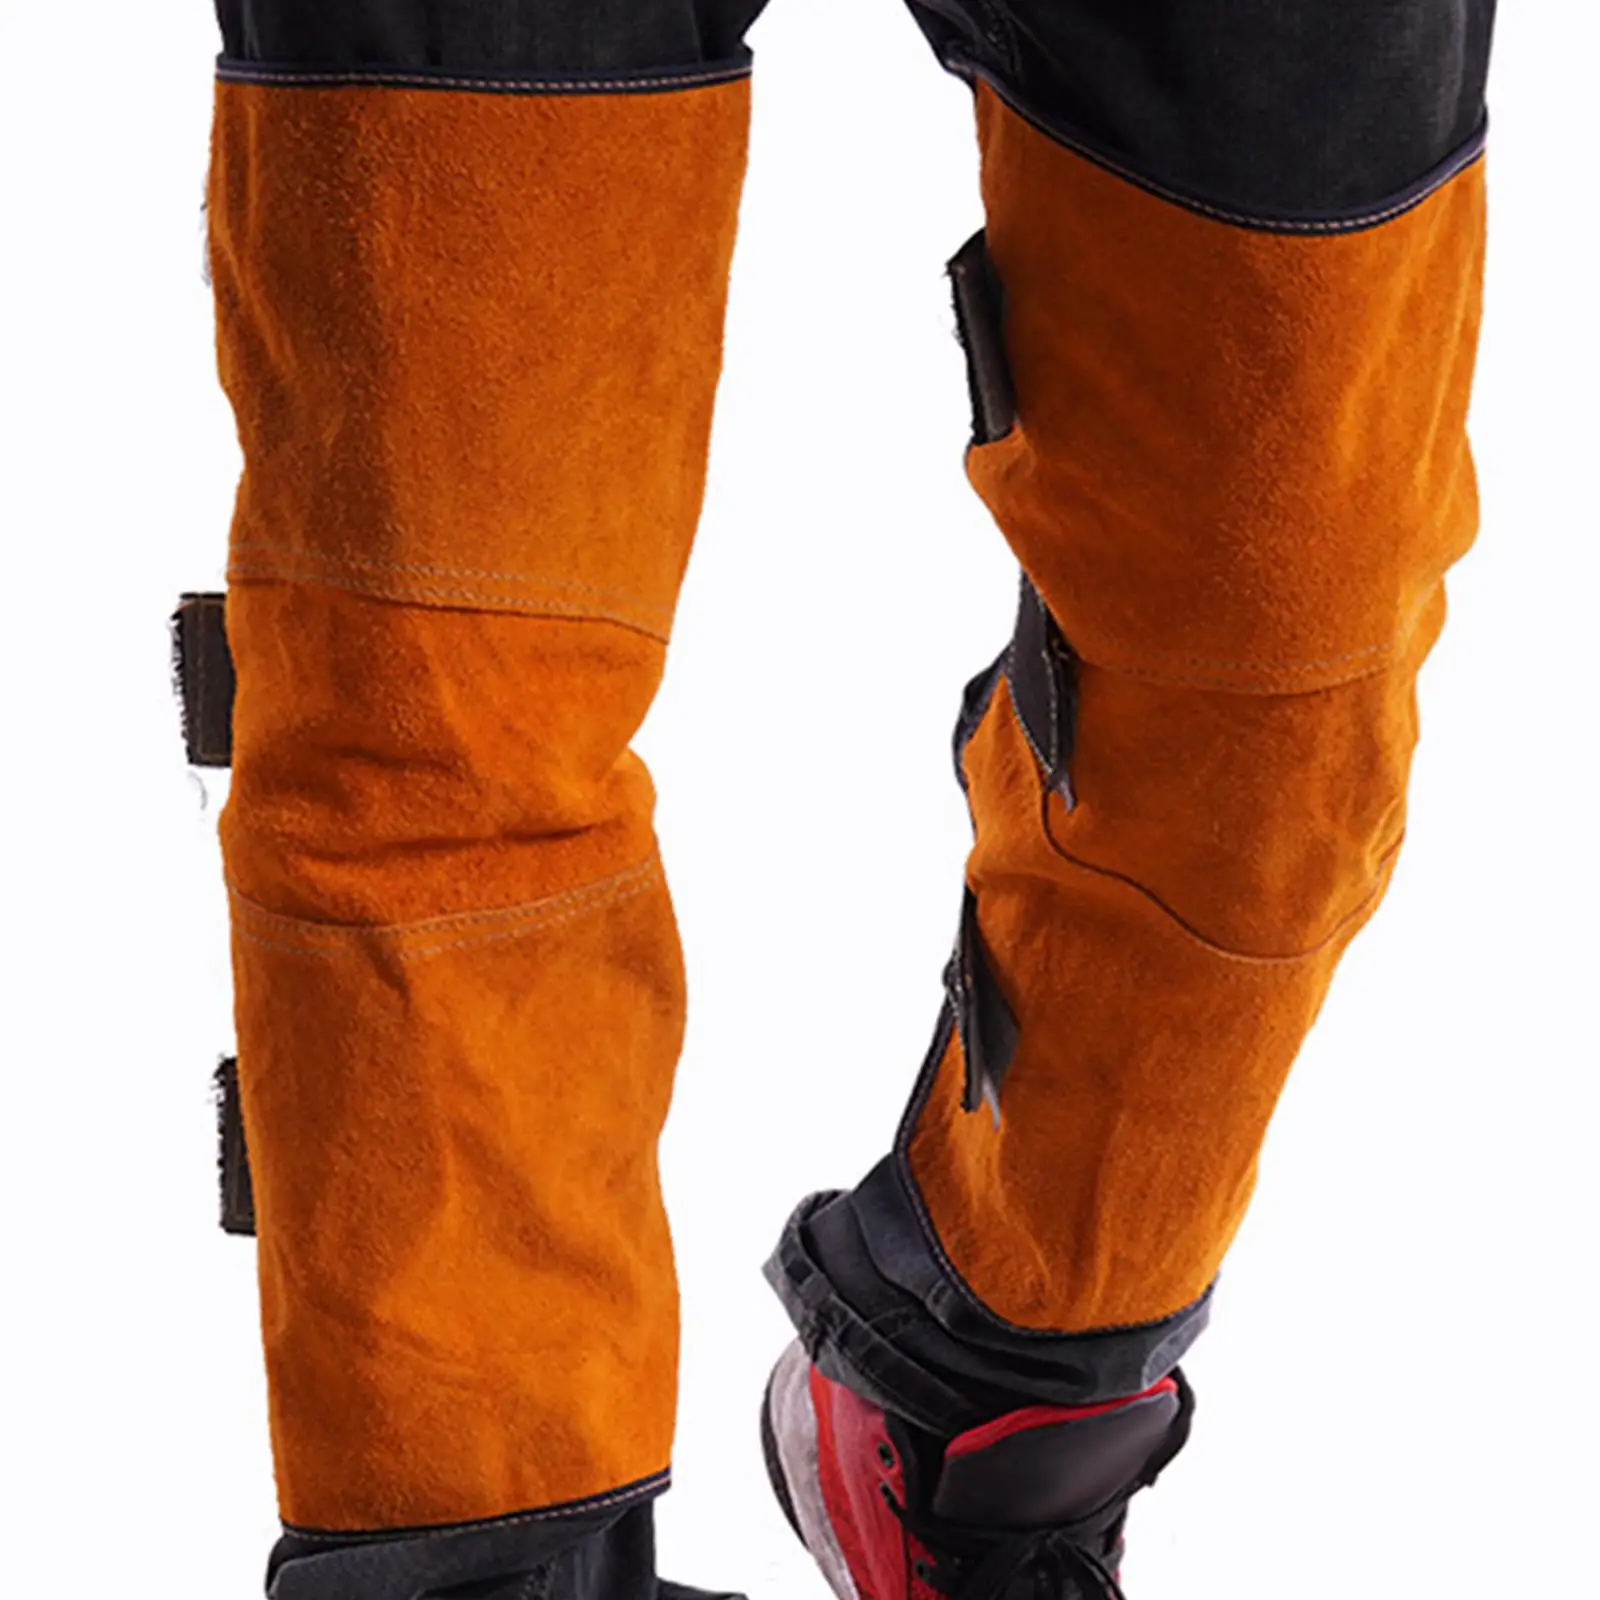 Welding Leg Covers Women Men Anti Scald Fireproof Comfortable Heat Resistant Reinforced Leg Protection Knee Protector Knee Pads